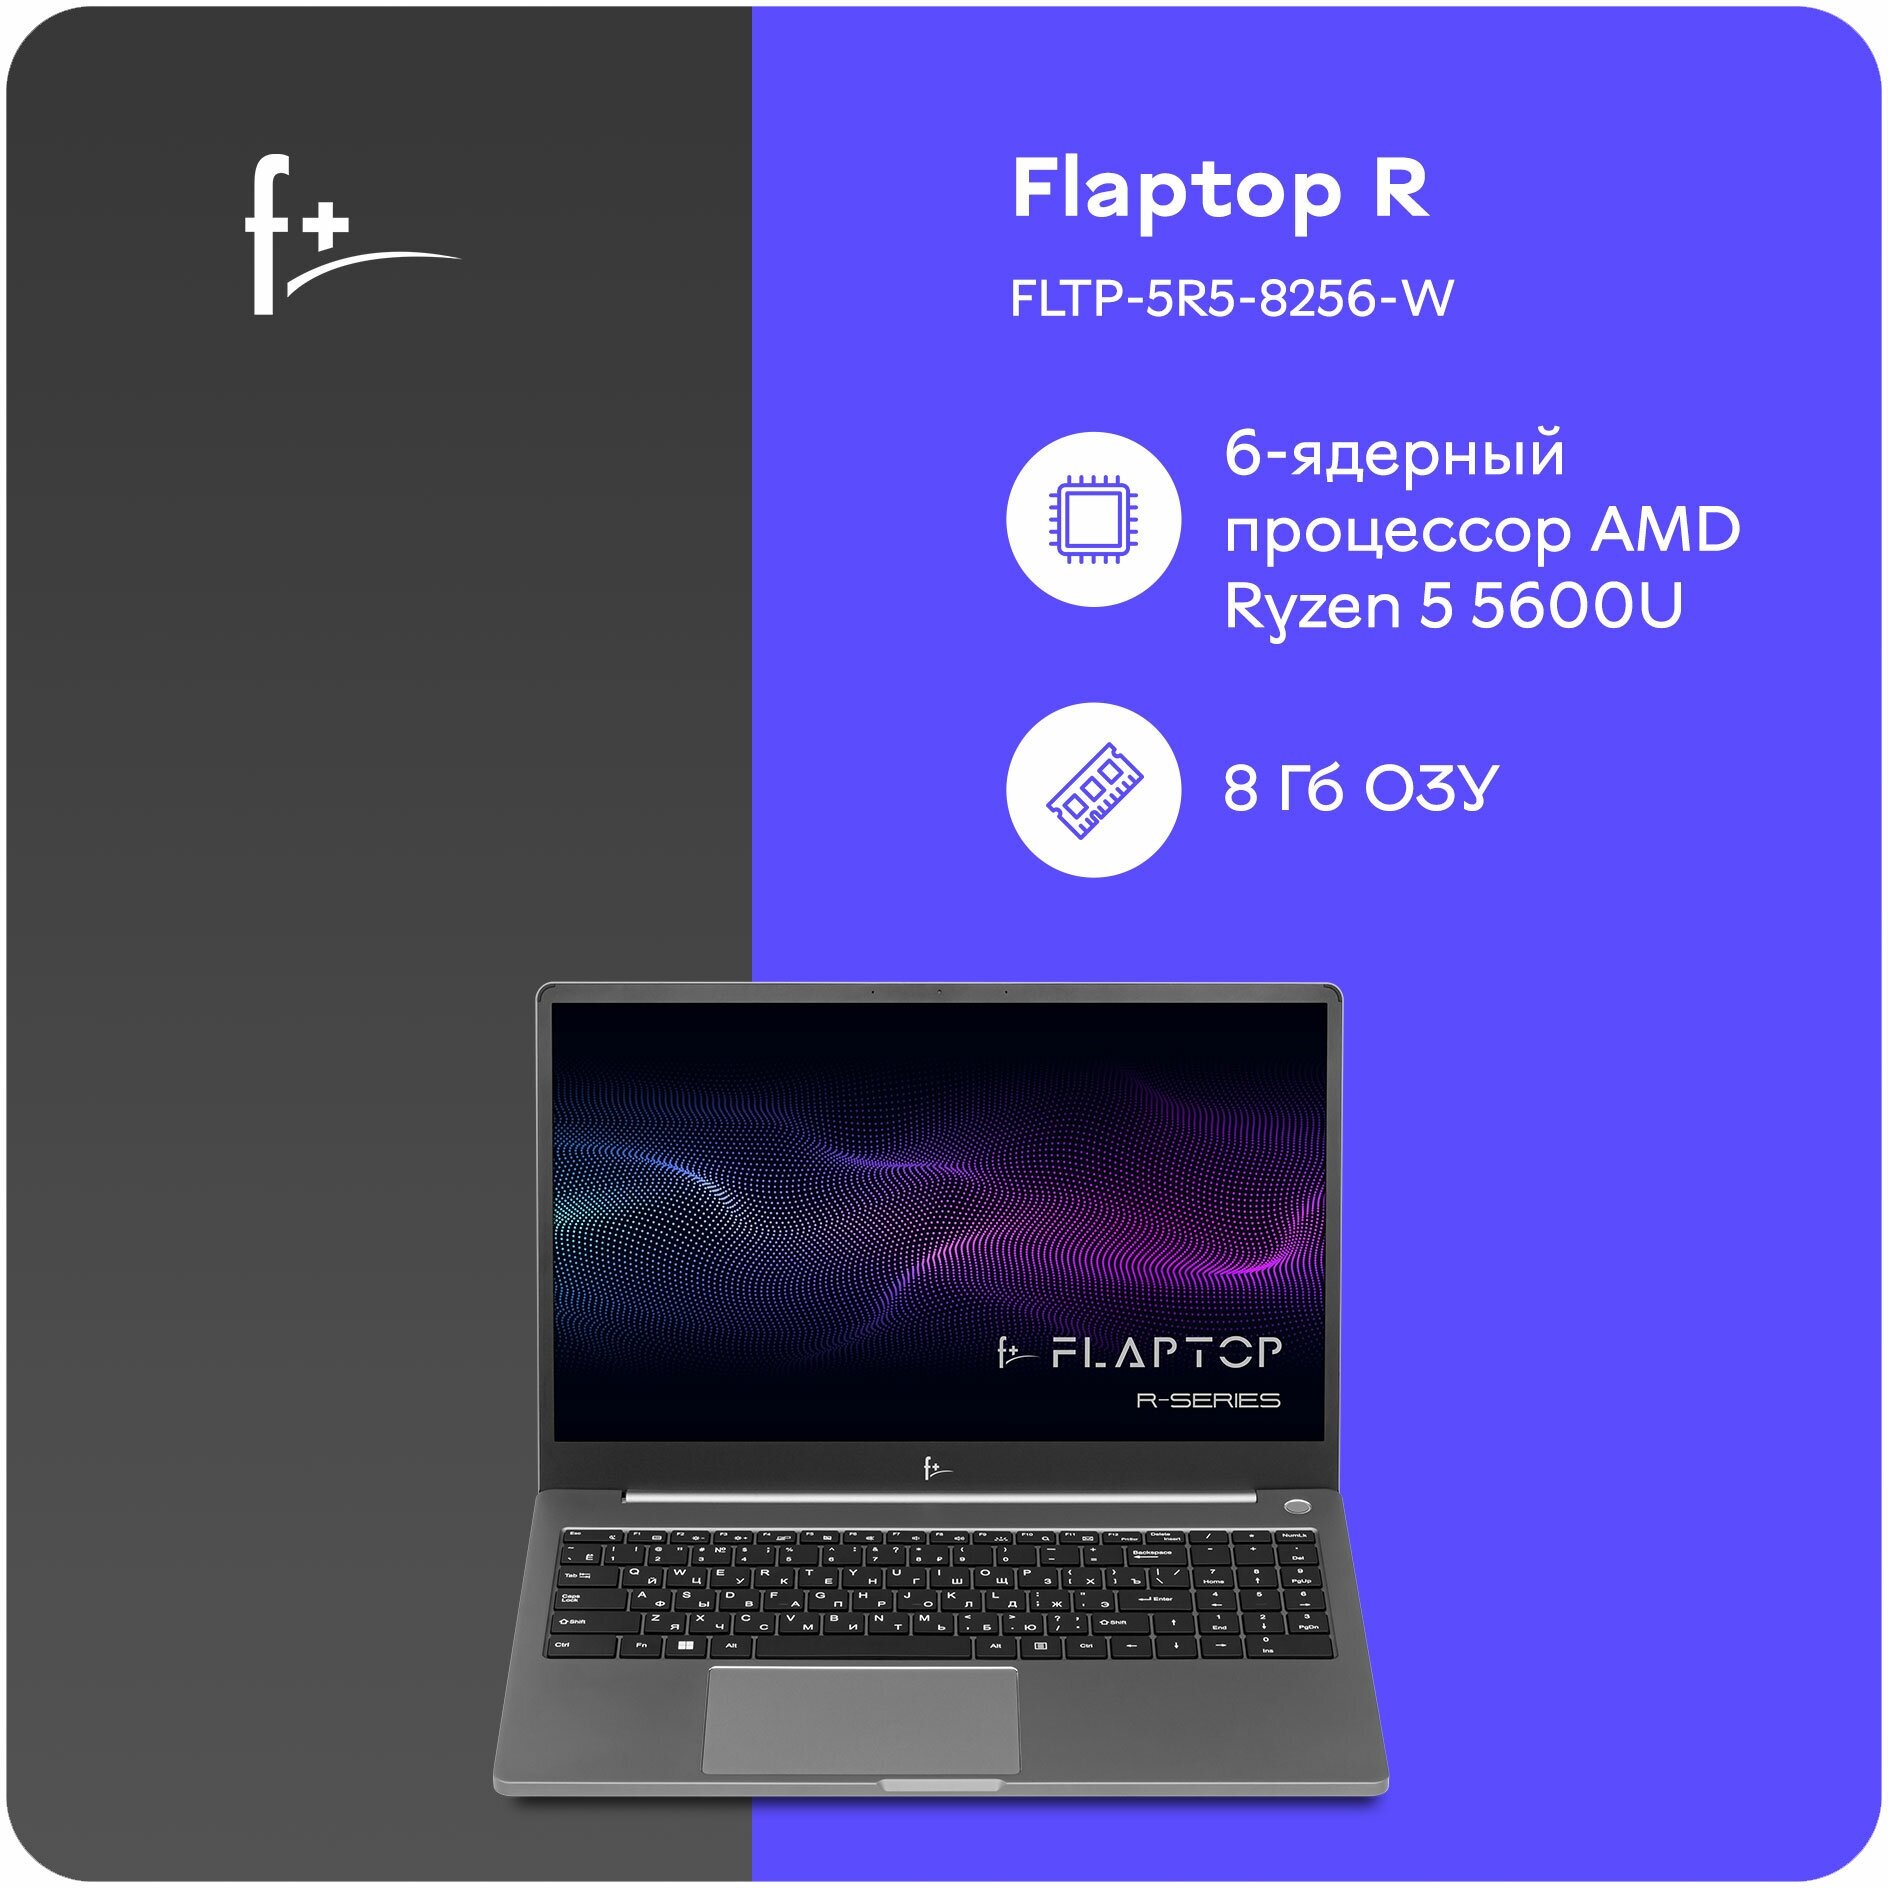 F+ FLAPTOP R FLTP-5R5-8256-w 15.6'' FHD IPS/AMD Ryzen 5 5600U Hexa/8GB/256GB SSD/Integrated/WiFi/BT5.0/Windows 11 Home/SILVER